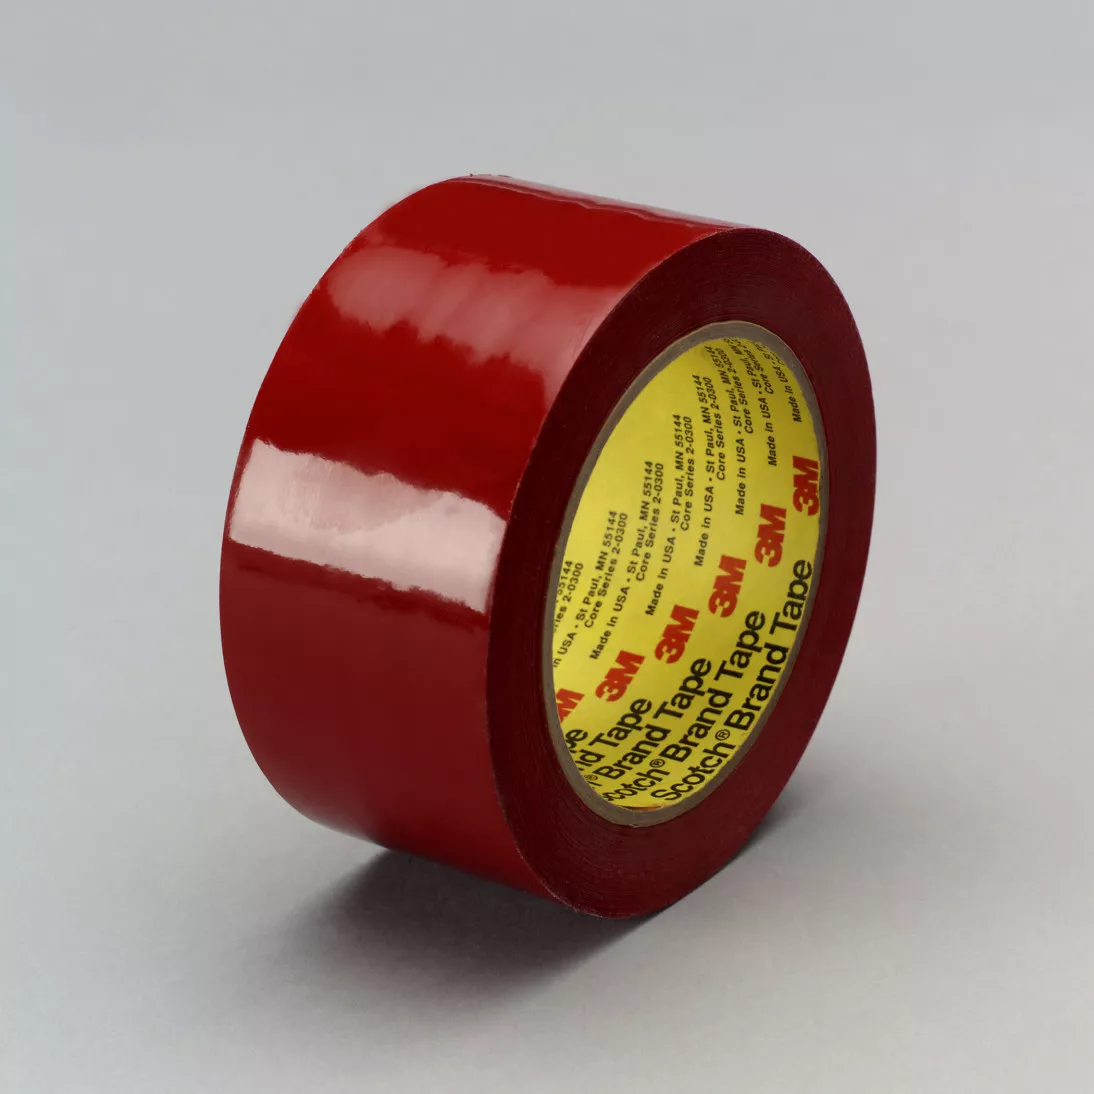 3M™ Polyethylene Tape 483, Red, 2 in x 36 yd, 5.0 mil, 24 rolls per case